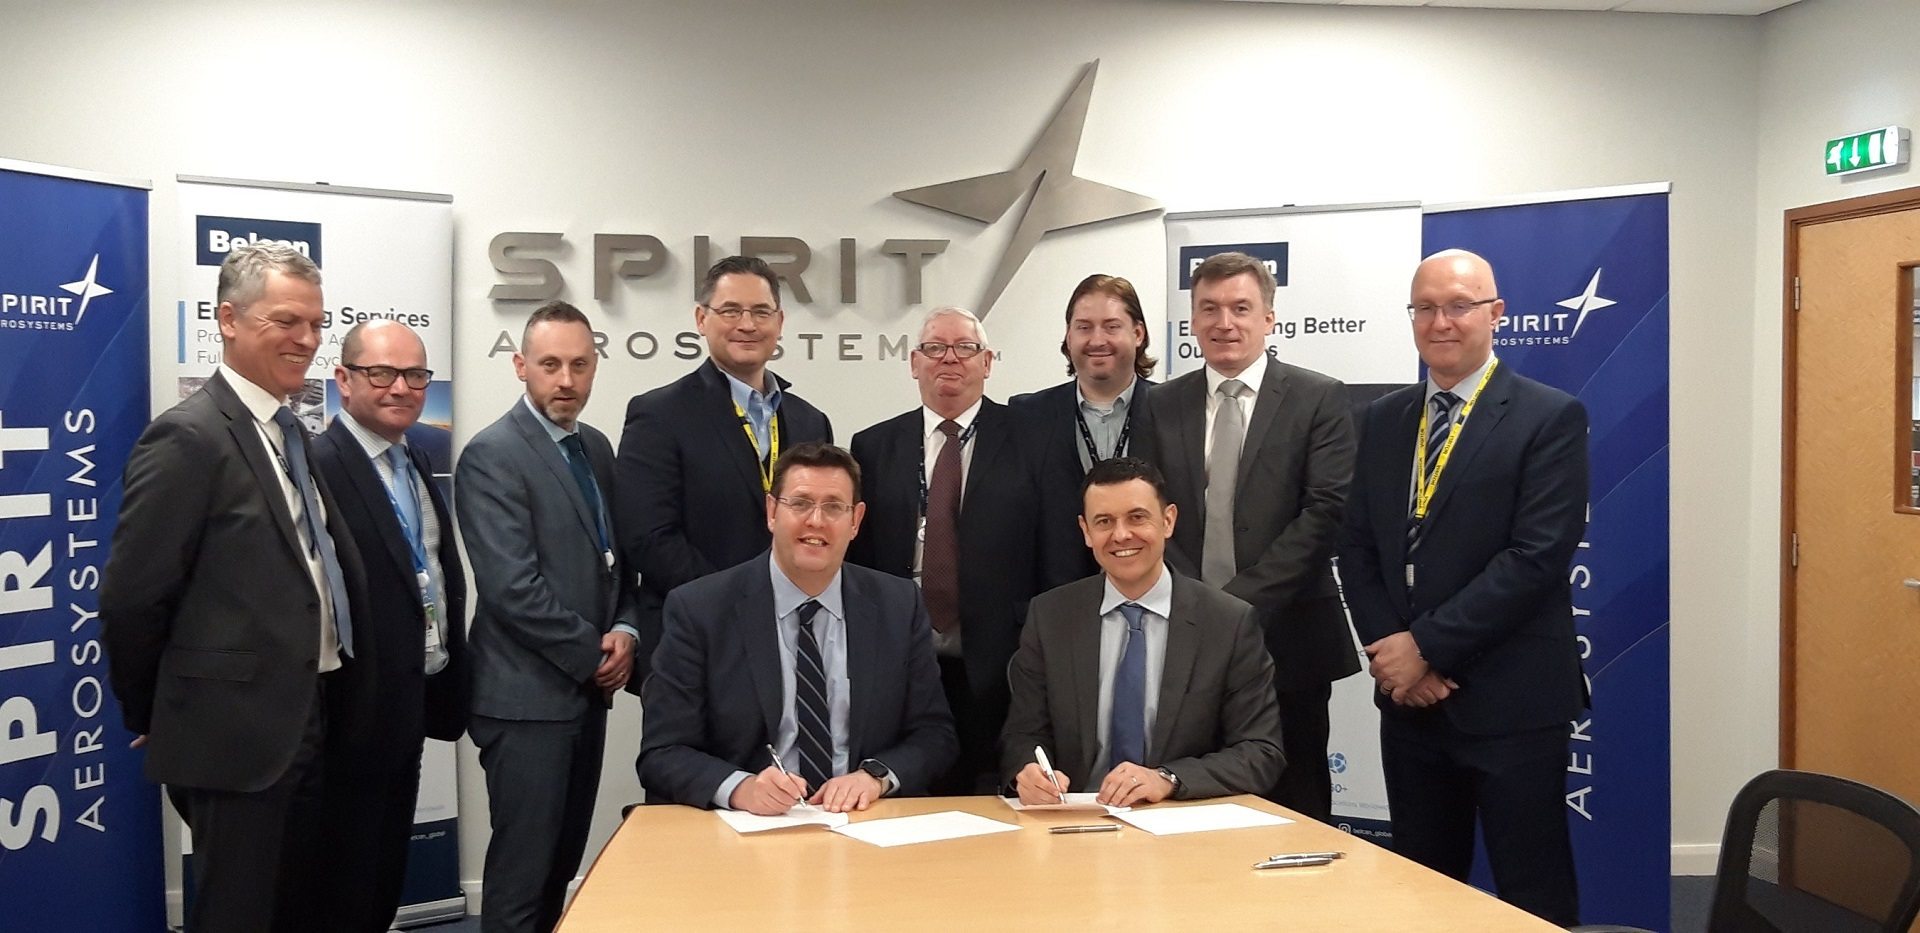 spirit-aerosystems-signs-partnership-for-prestwick-innovation-centre-aerospace-manufacturing